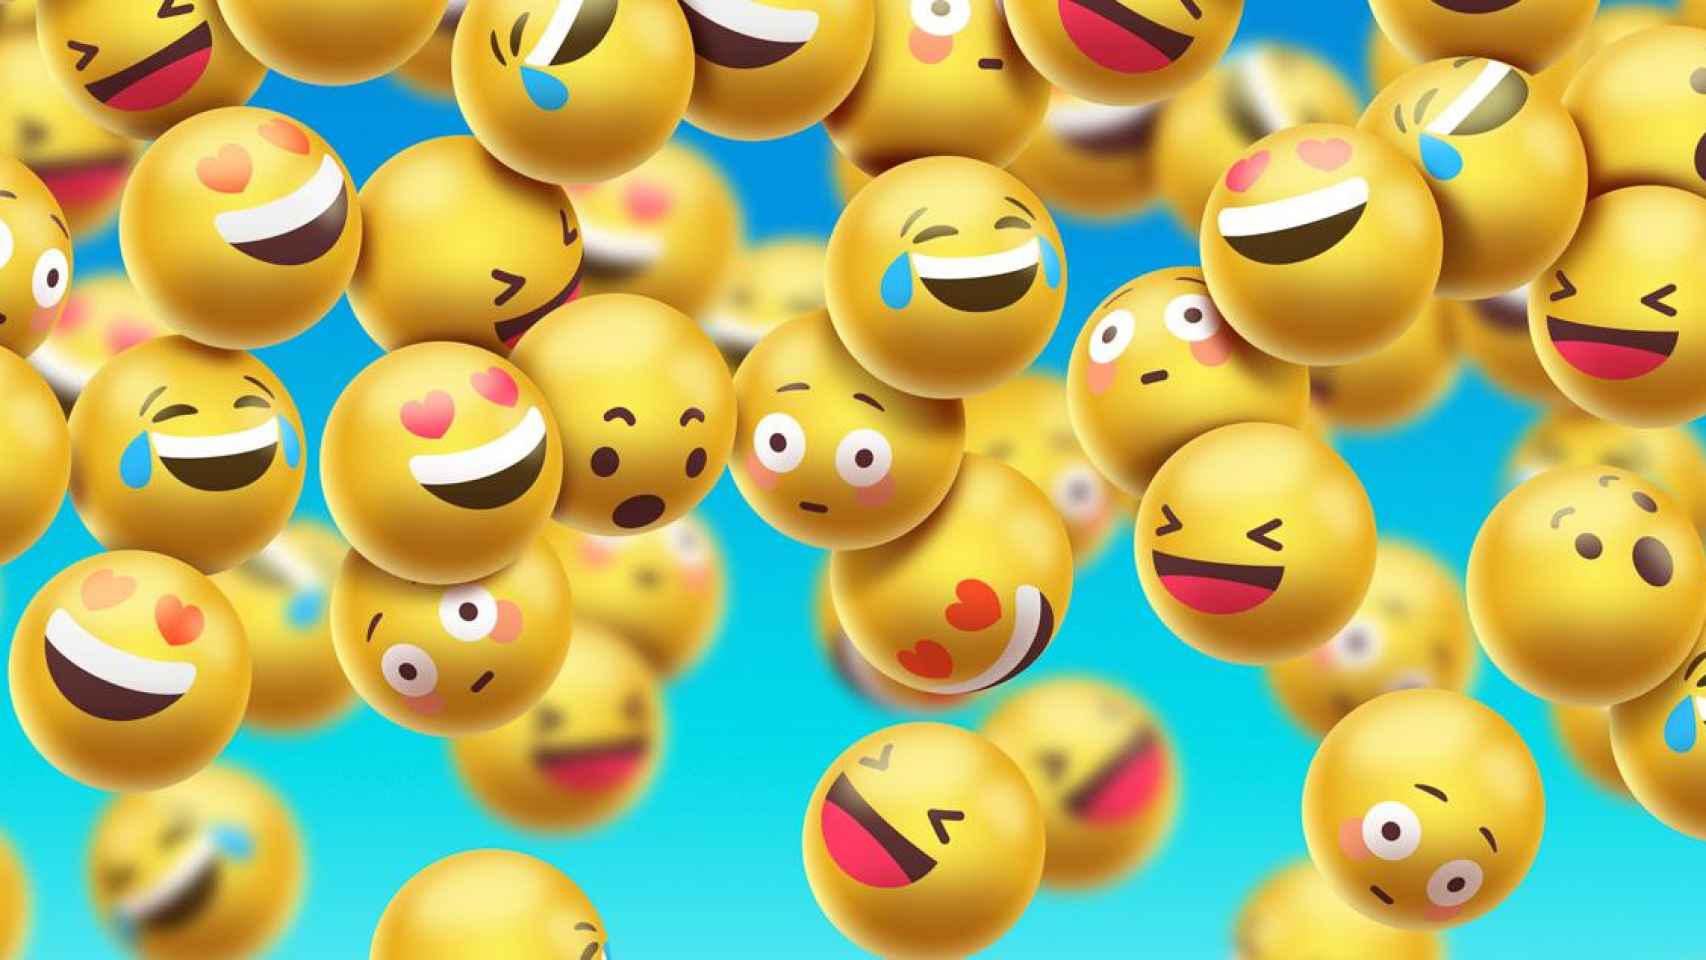 Varios emojis flotantes / FREEPIK